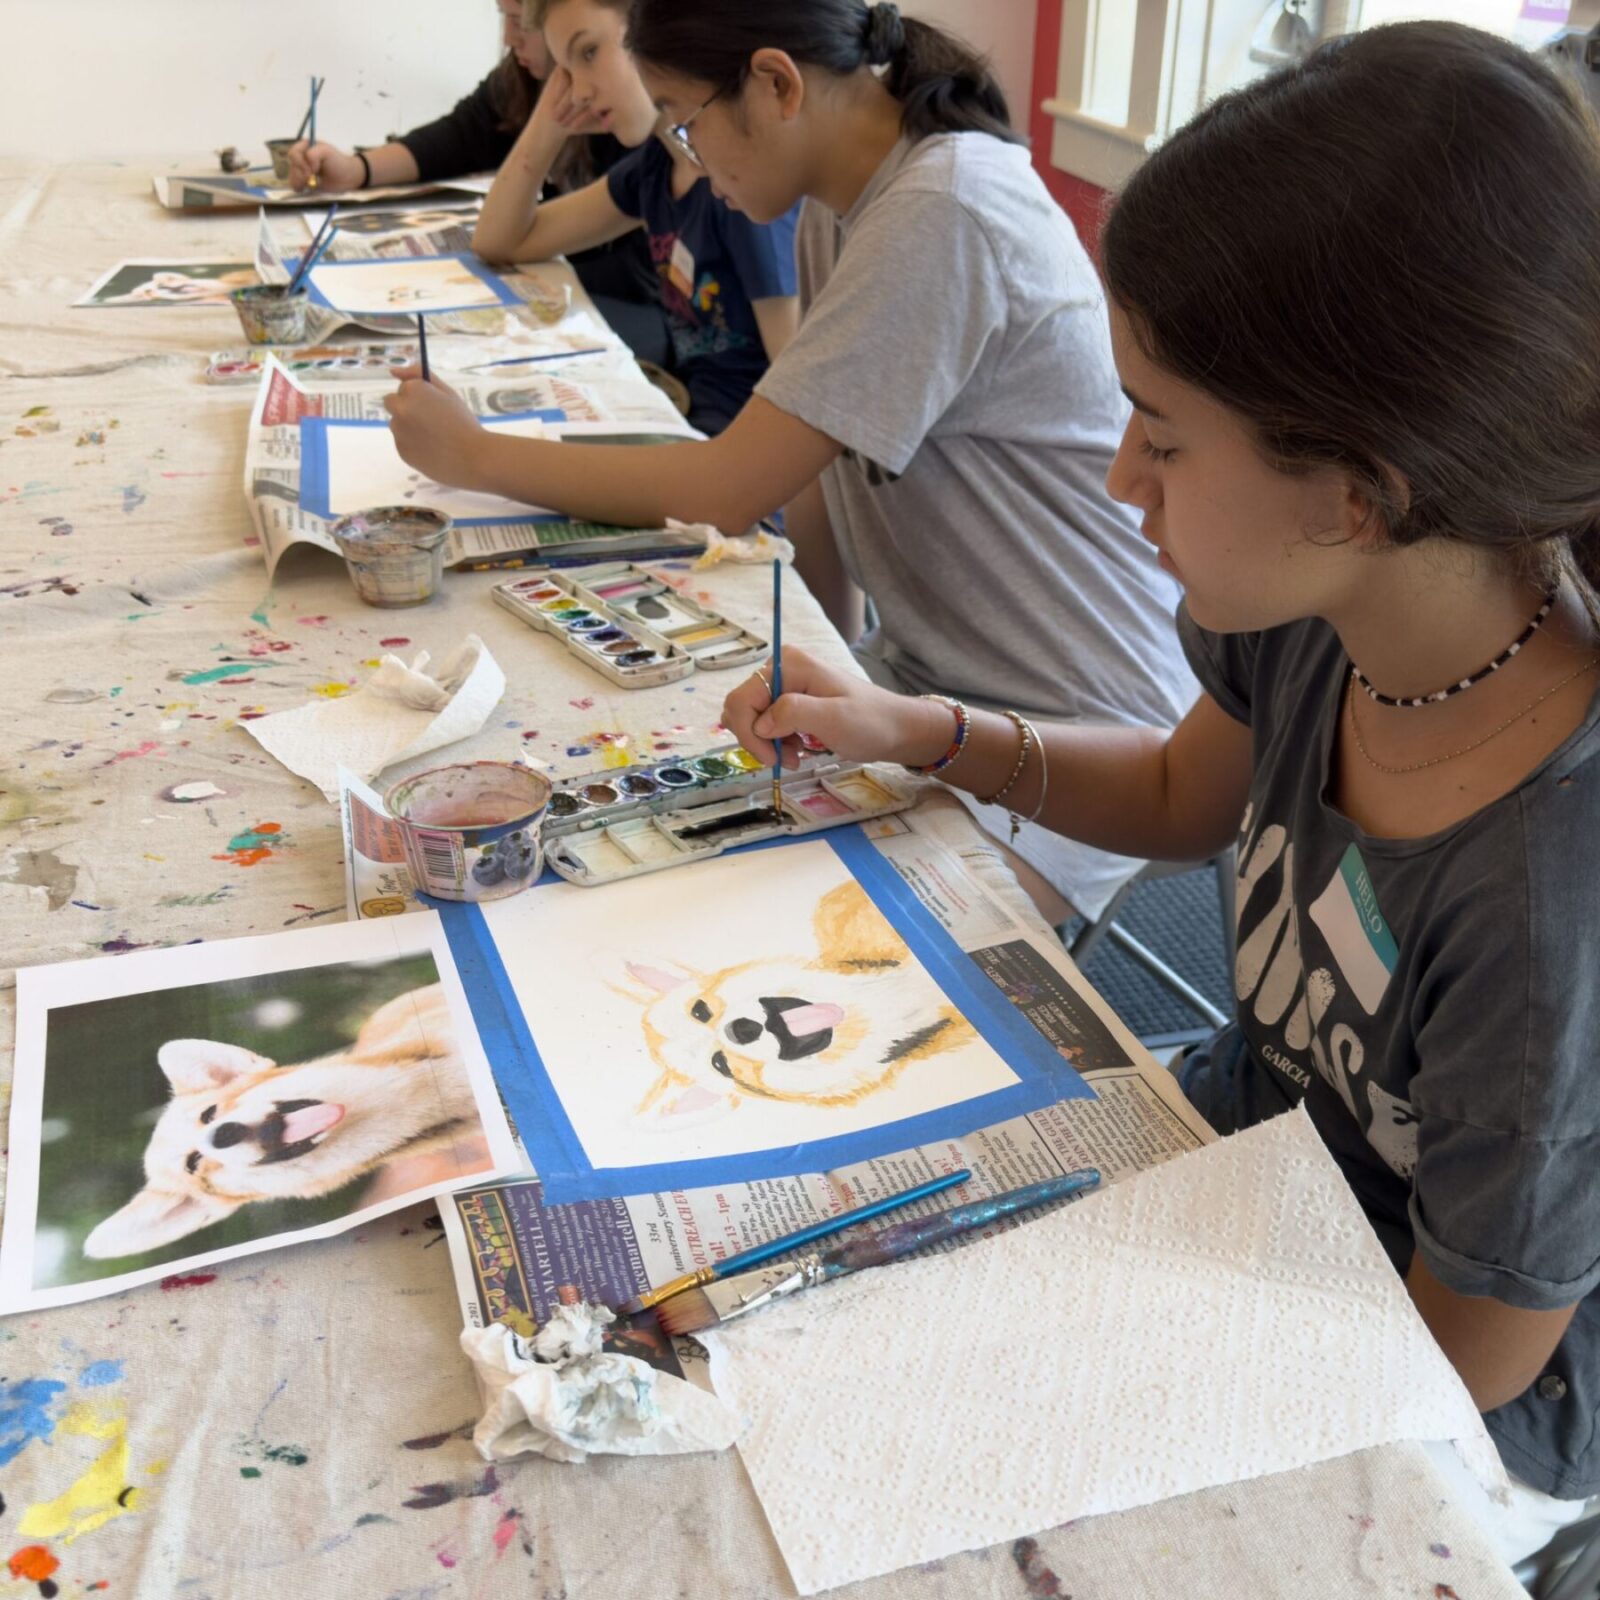 3 students making watercolor paintings of corgi